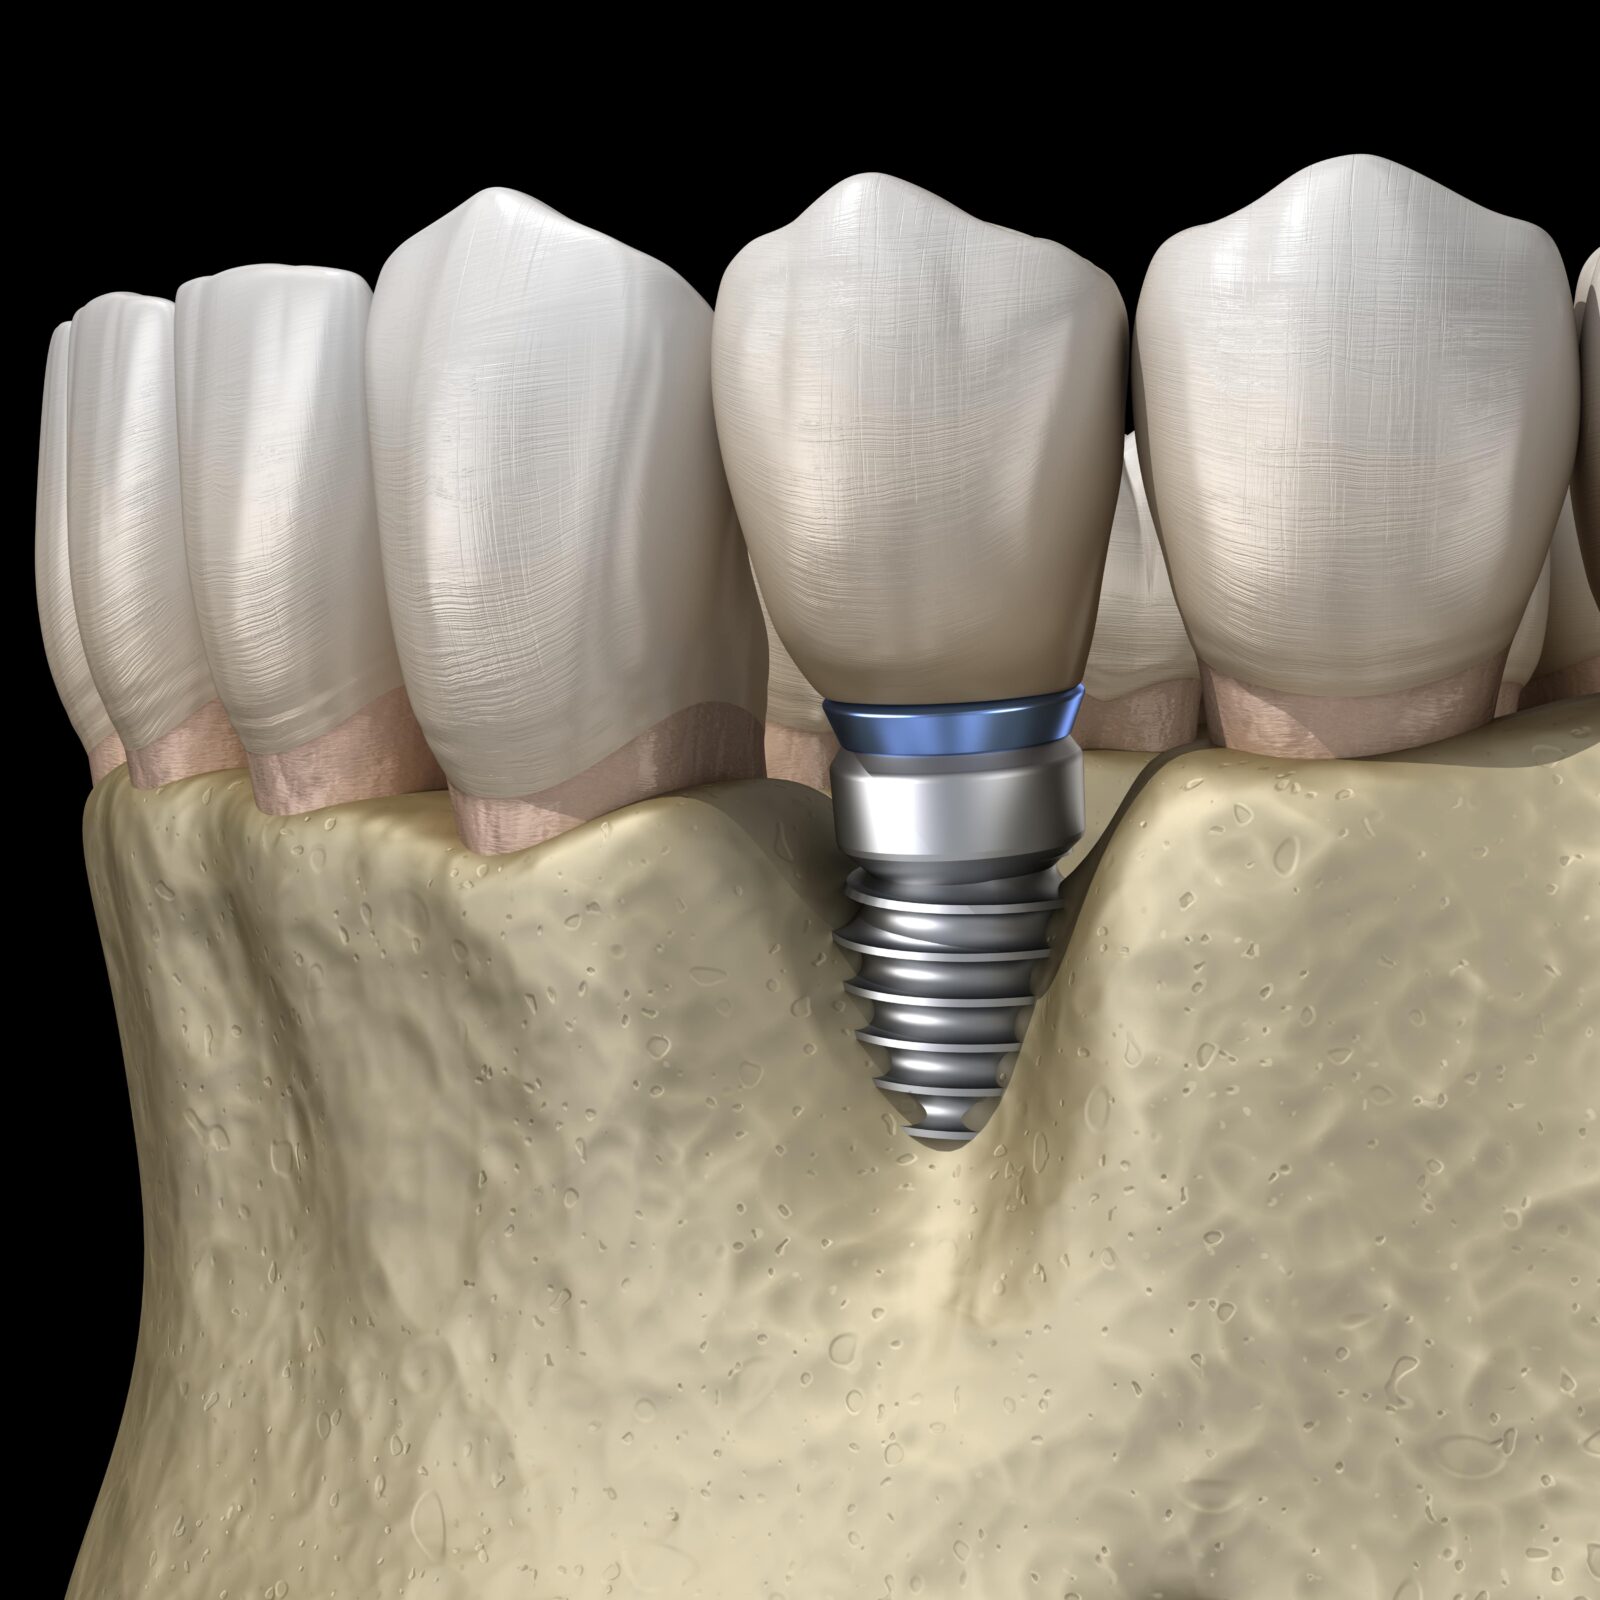 bone loss around dental implant